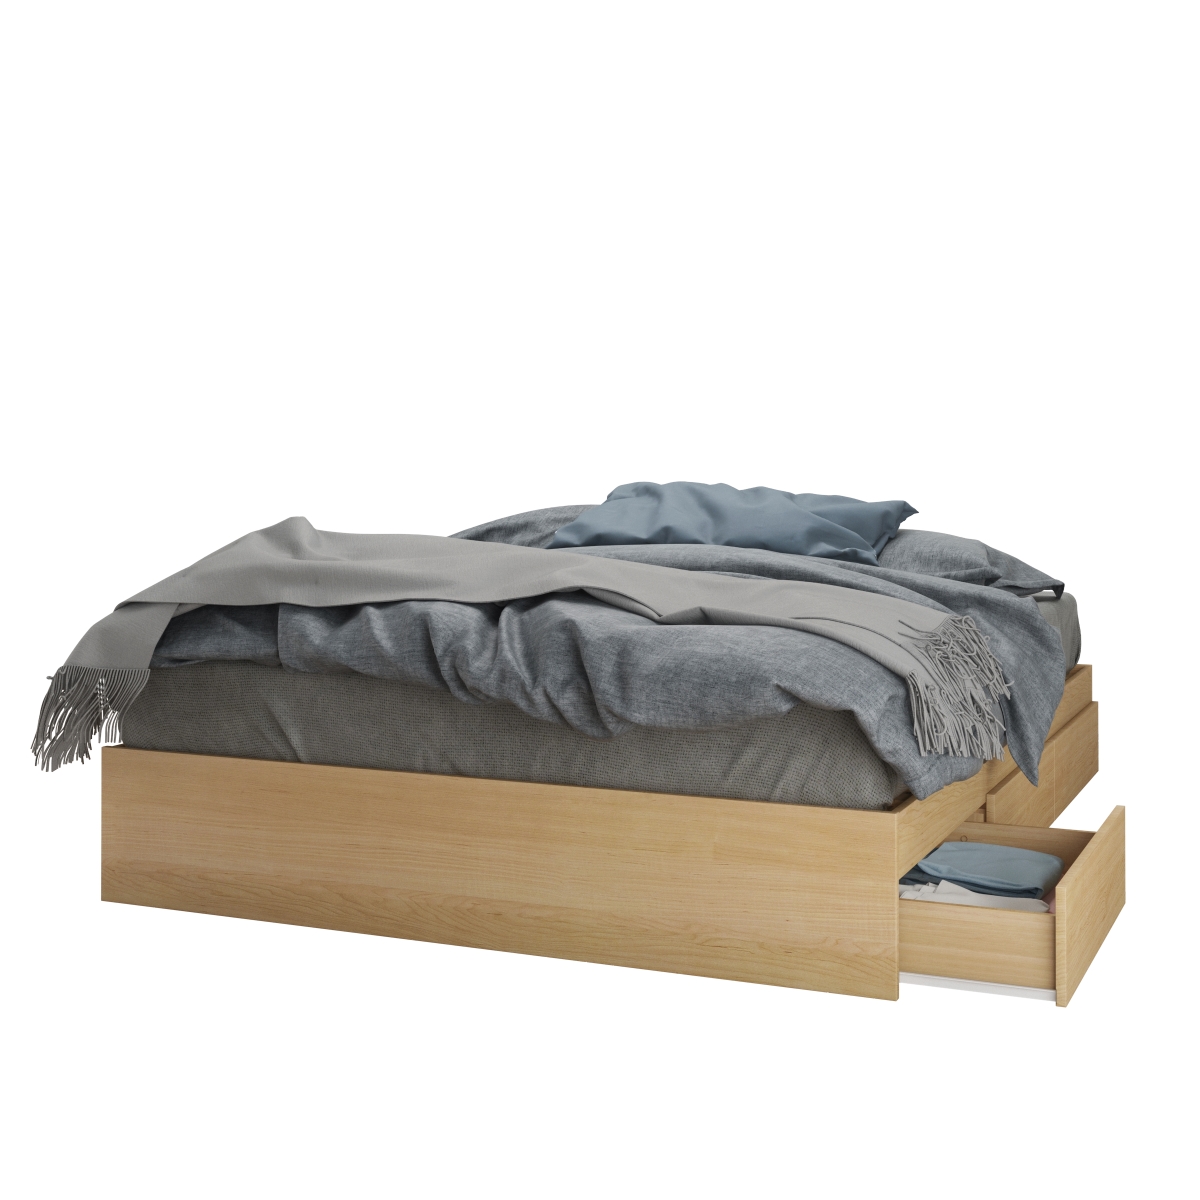 Nomad Bed Bundle, Natural Maple Laminate & White Matte Lacquer - Queen Size